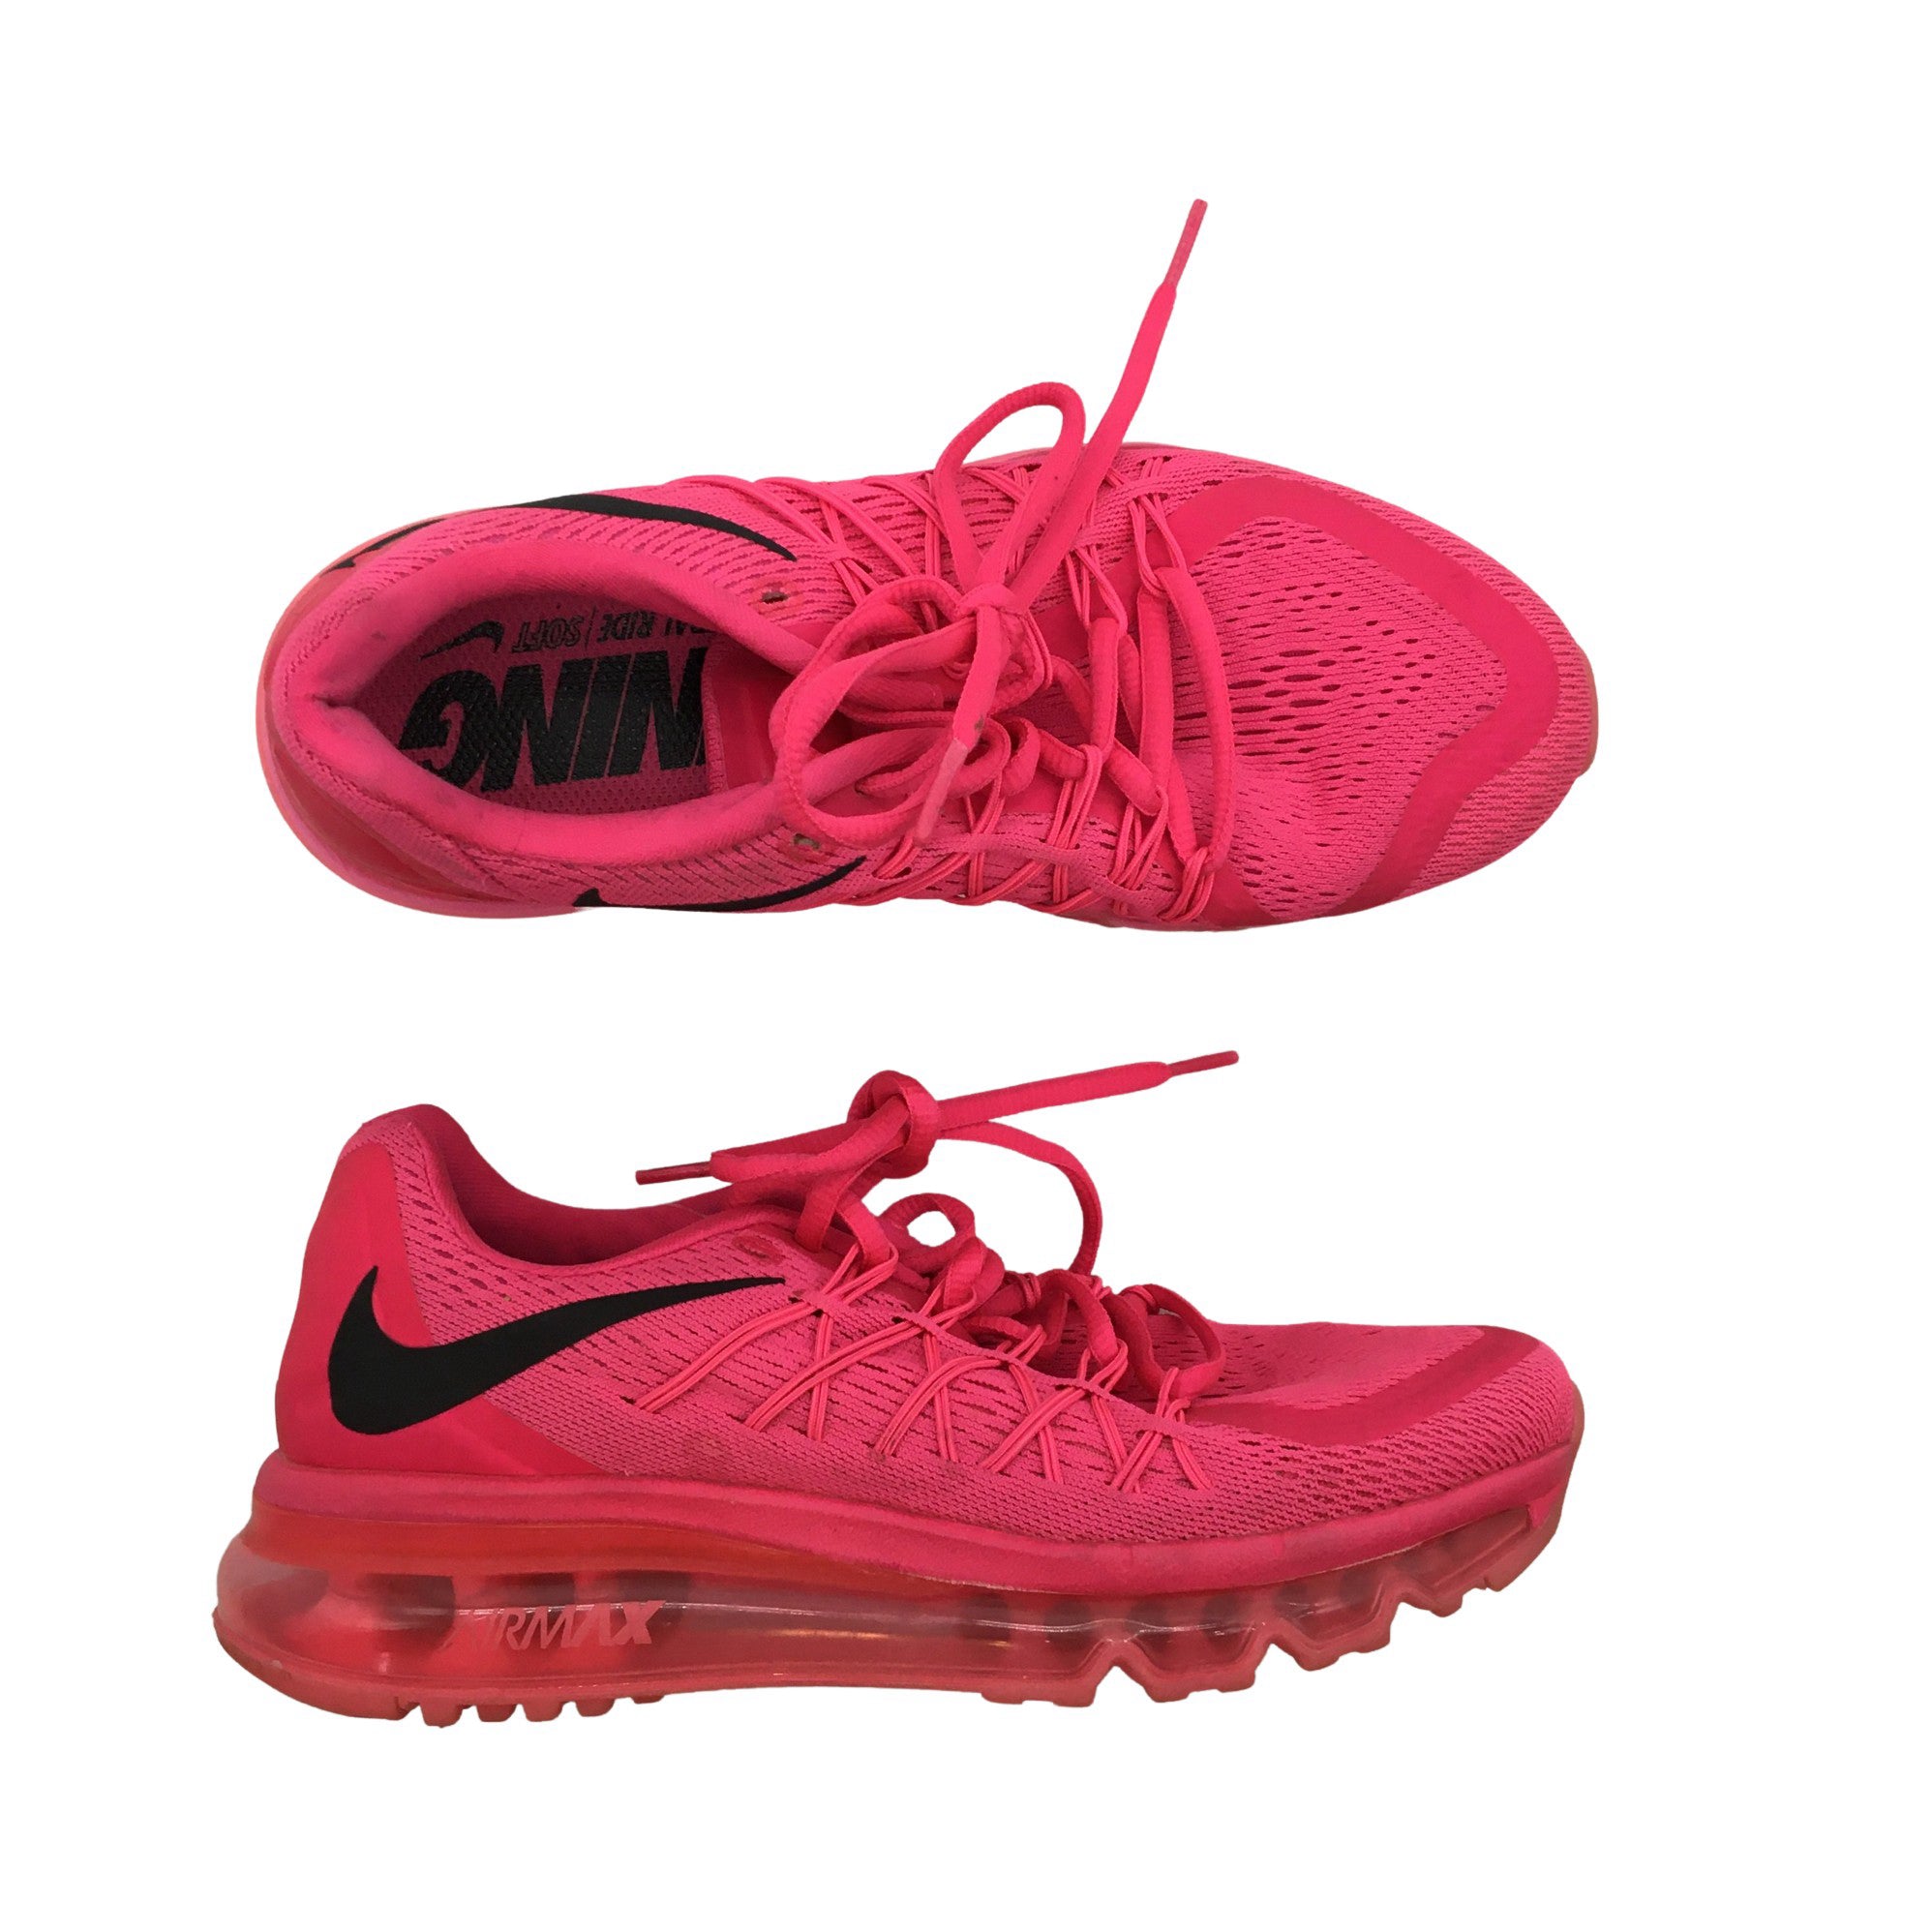 hoofdonderwijzer schattig publiek Women's Nike Running shoes, size 37 (Pink) | Emmy